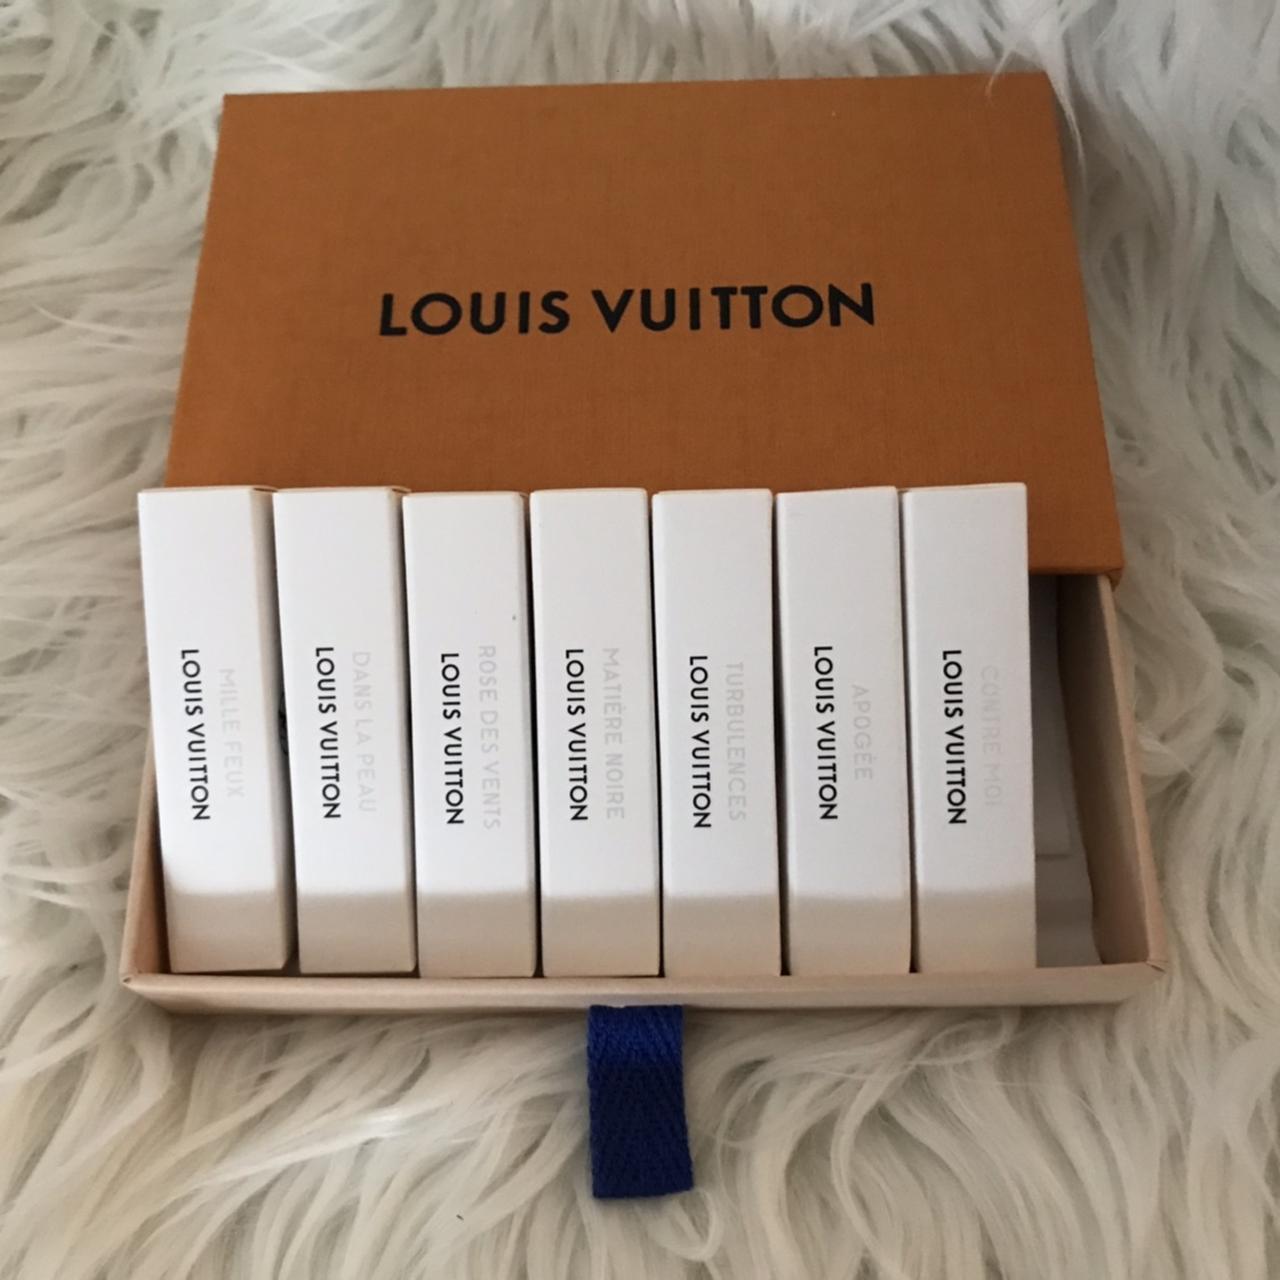 Louis Vuitton Parfum Sample 7*2ml With Box